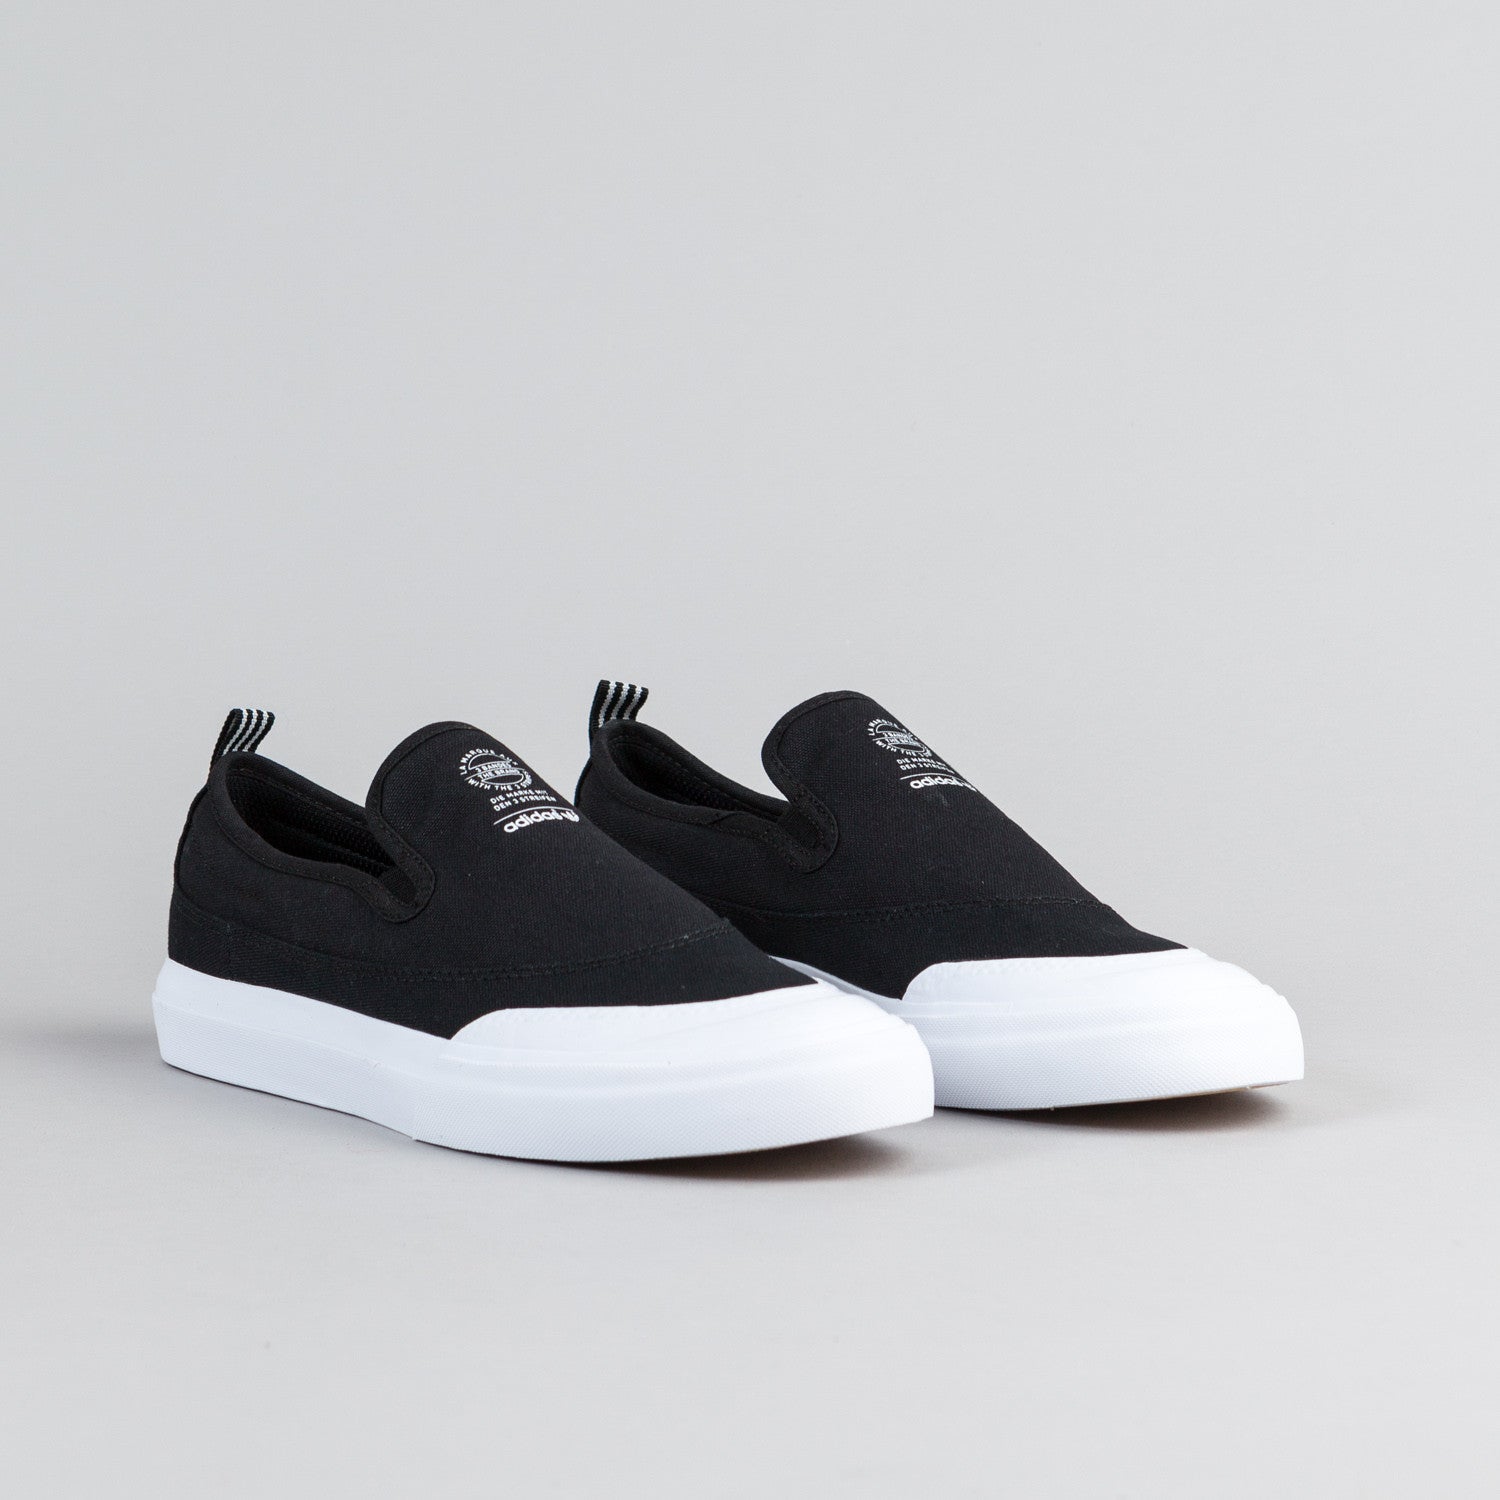 Adidas Matchcourt Slip On Shoes - Core Black / Core Black / FTW White ...